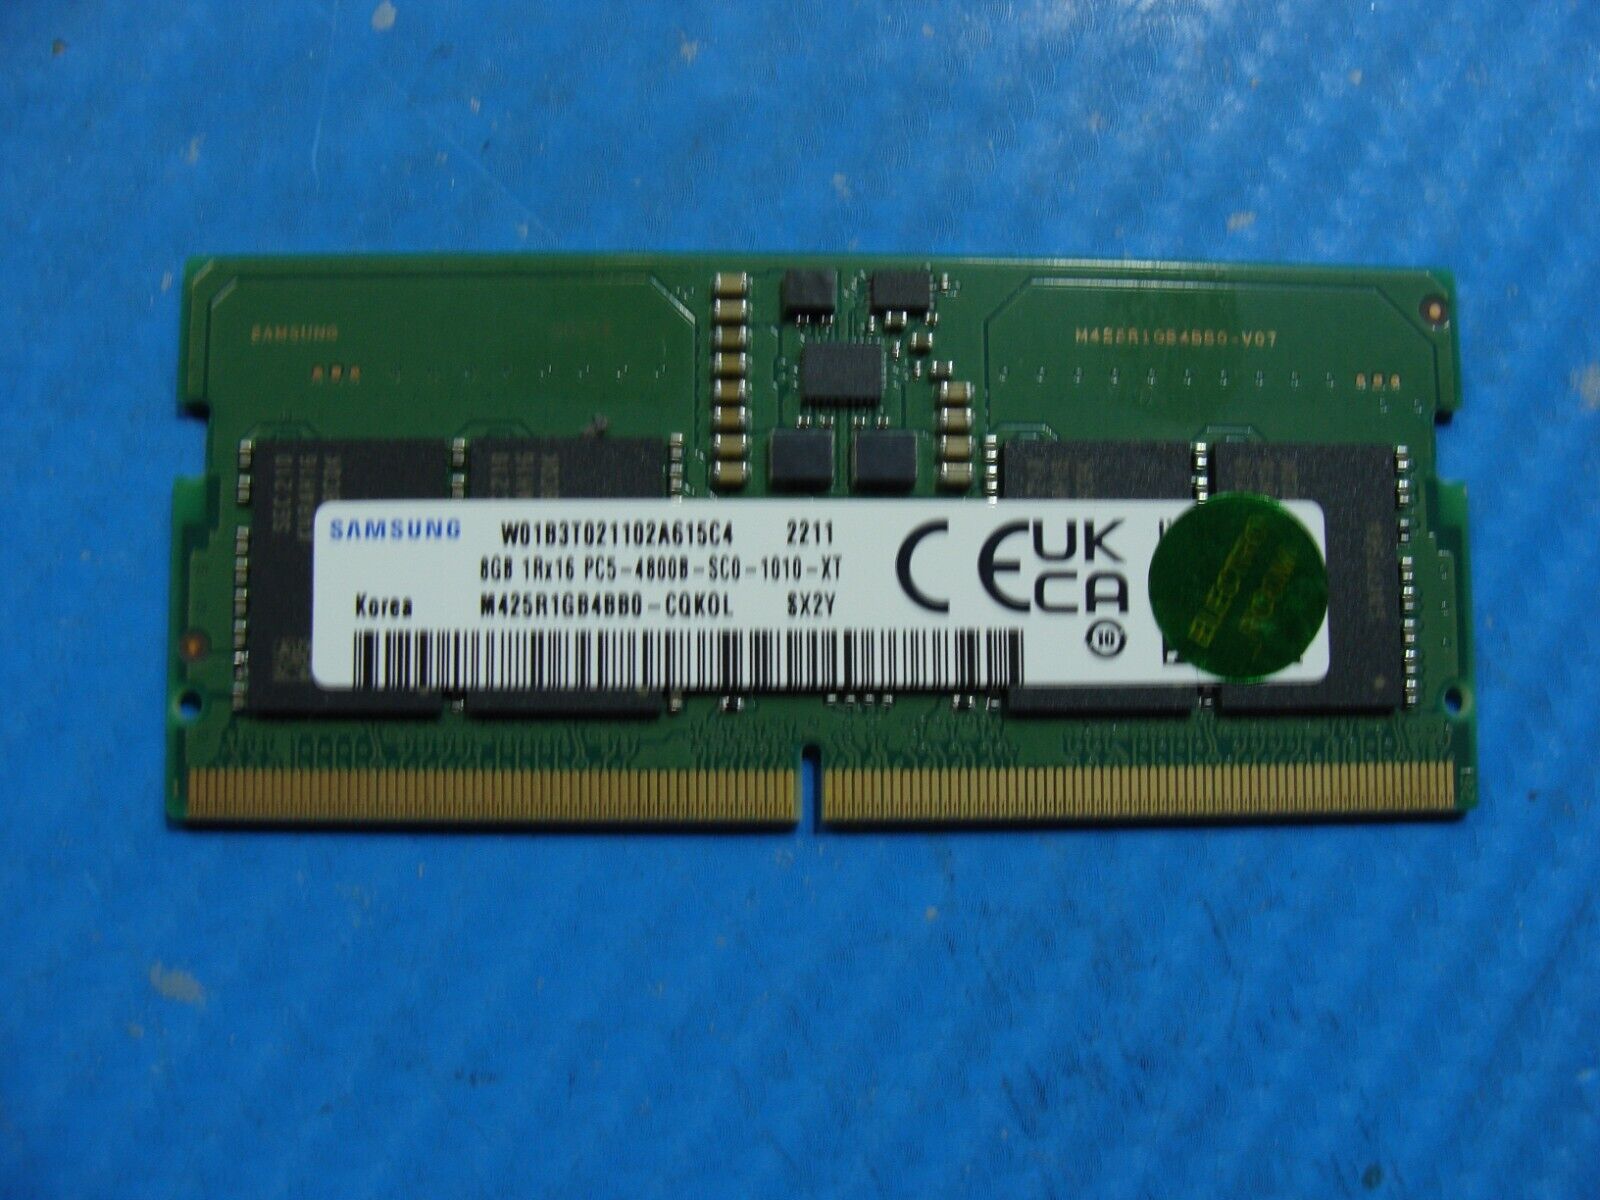 Asus B5402FBA Samsung 8GB 1Rx16 PC5-4800B SODIMM Memory RAM M425R1GB4BB0-CQK0L